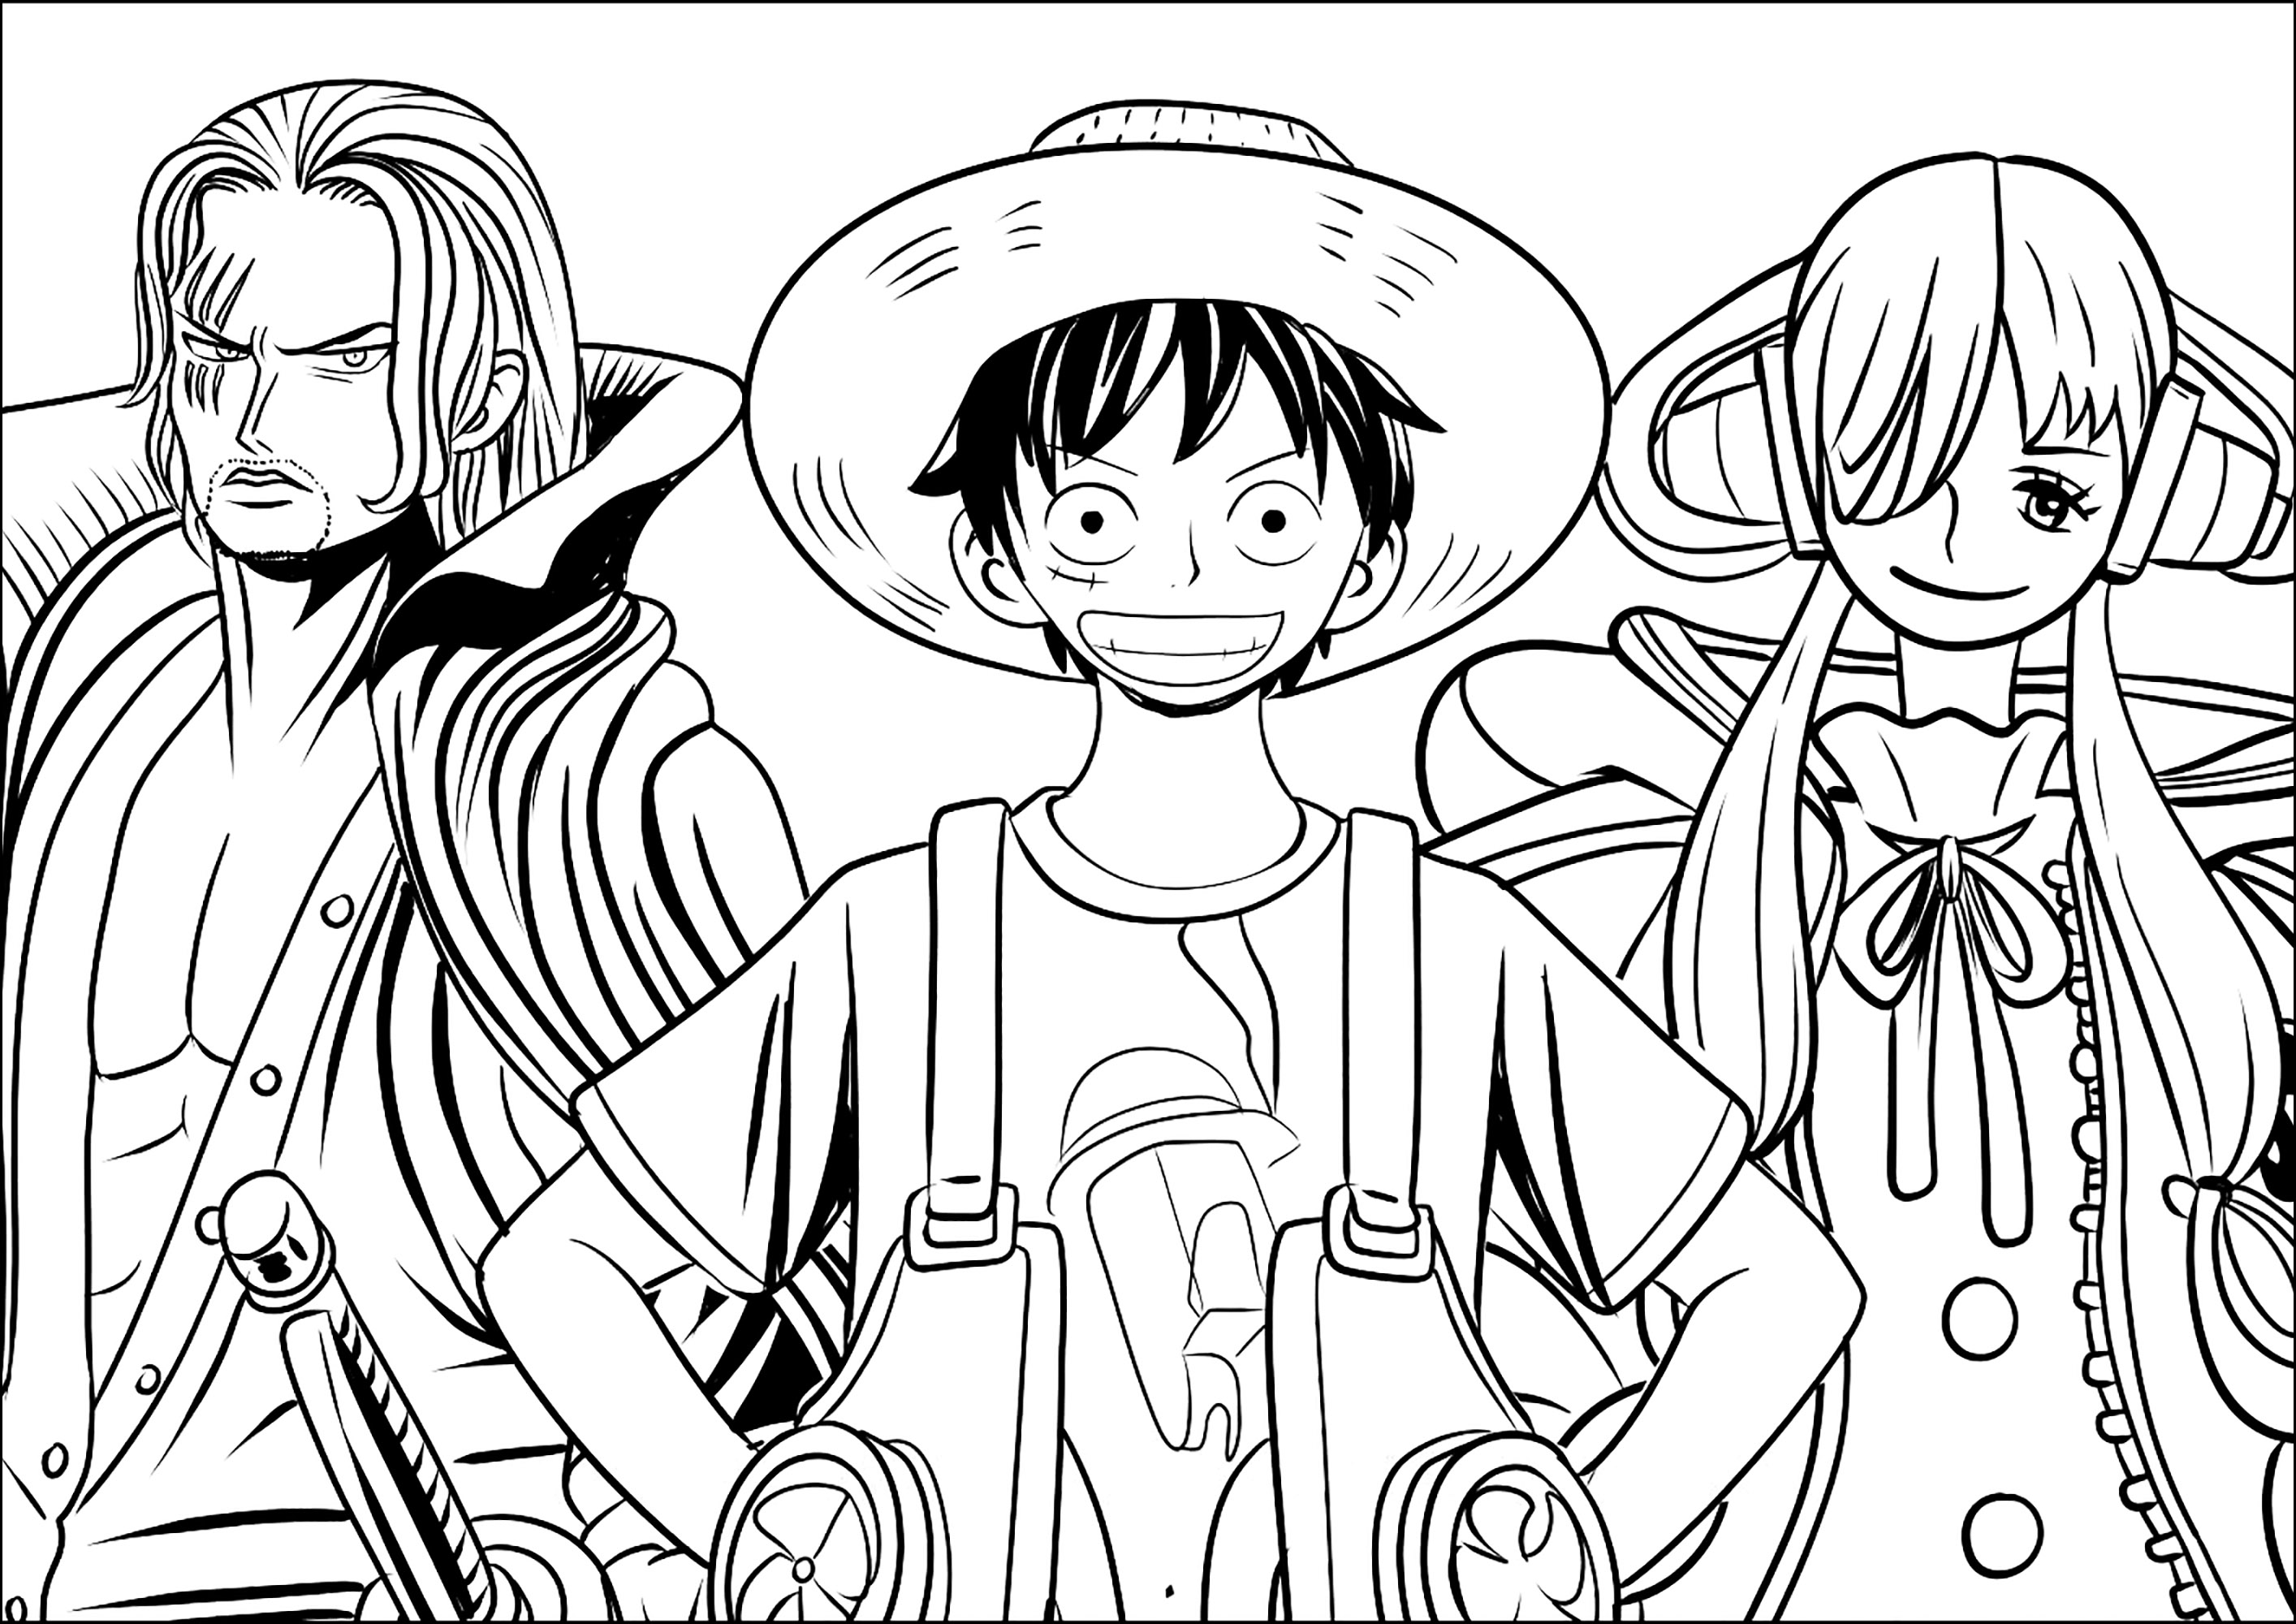 Principales personajes de One Piece. Monkey D. Luffy, Roronoa Zoro y Nami